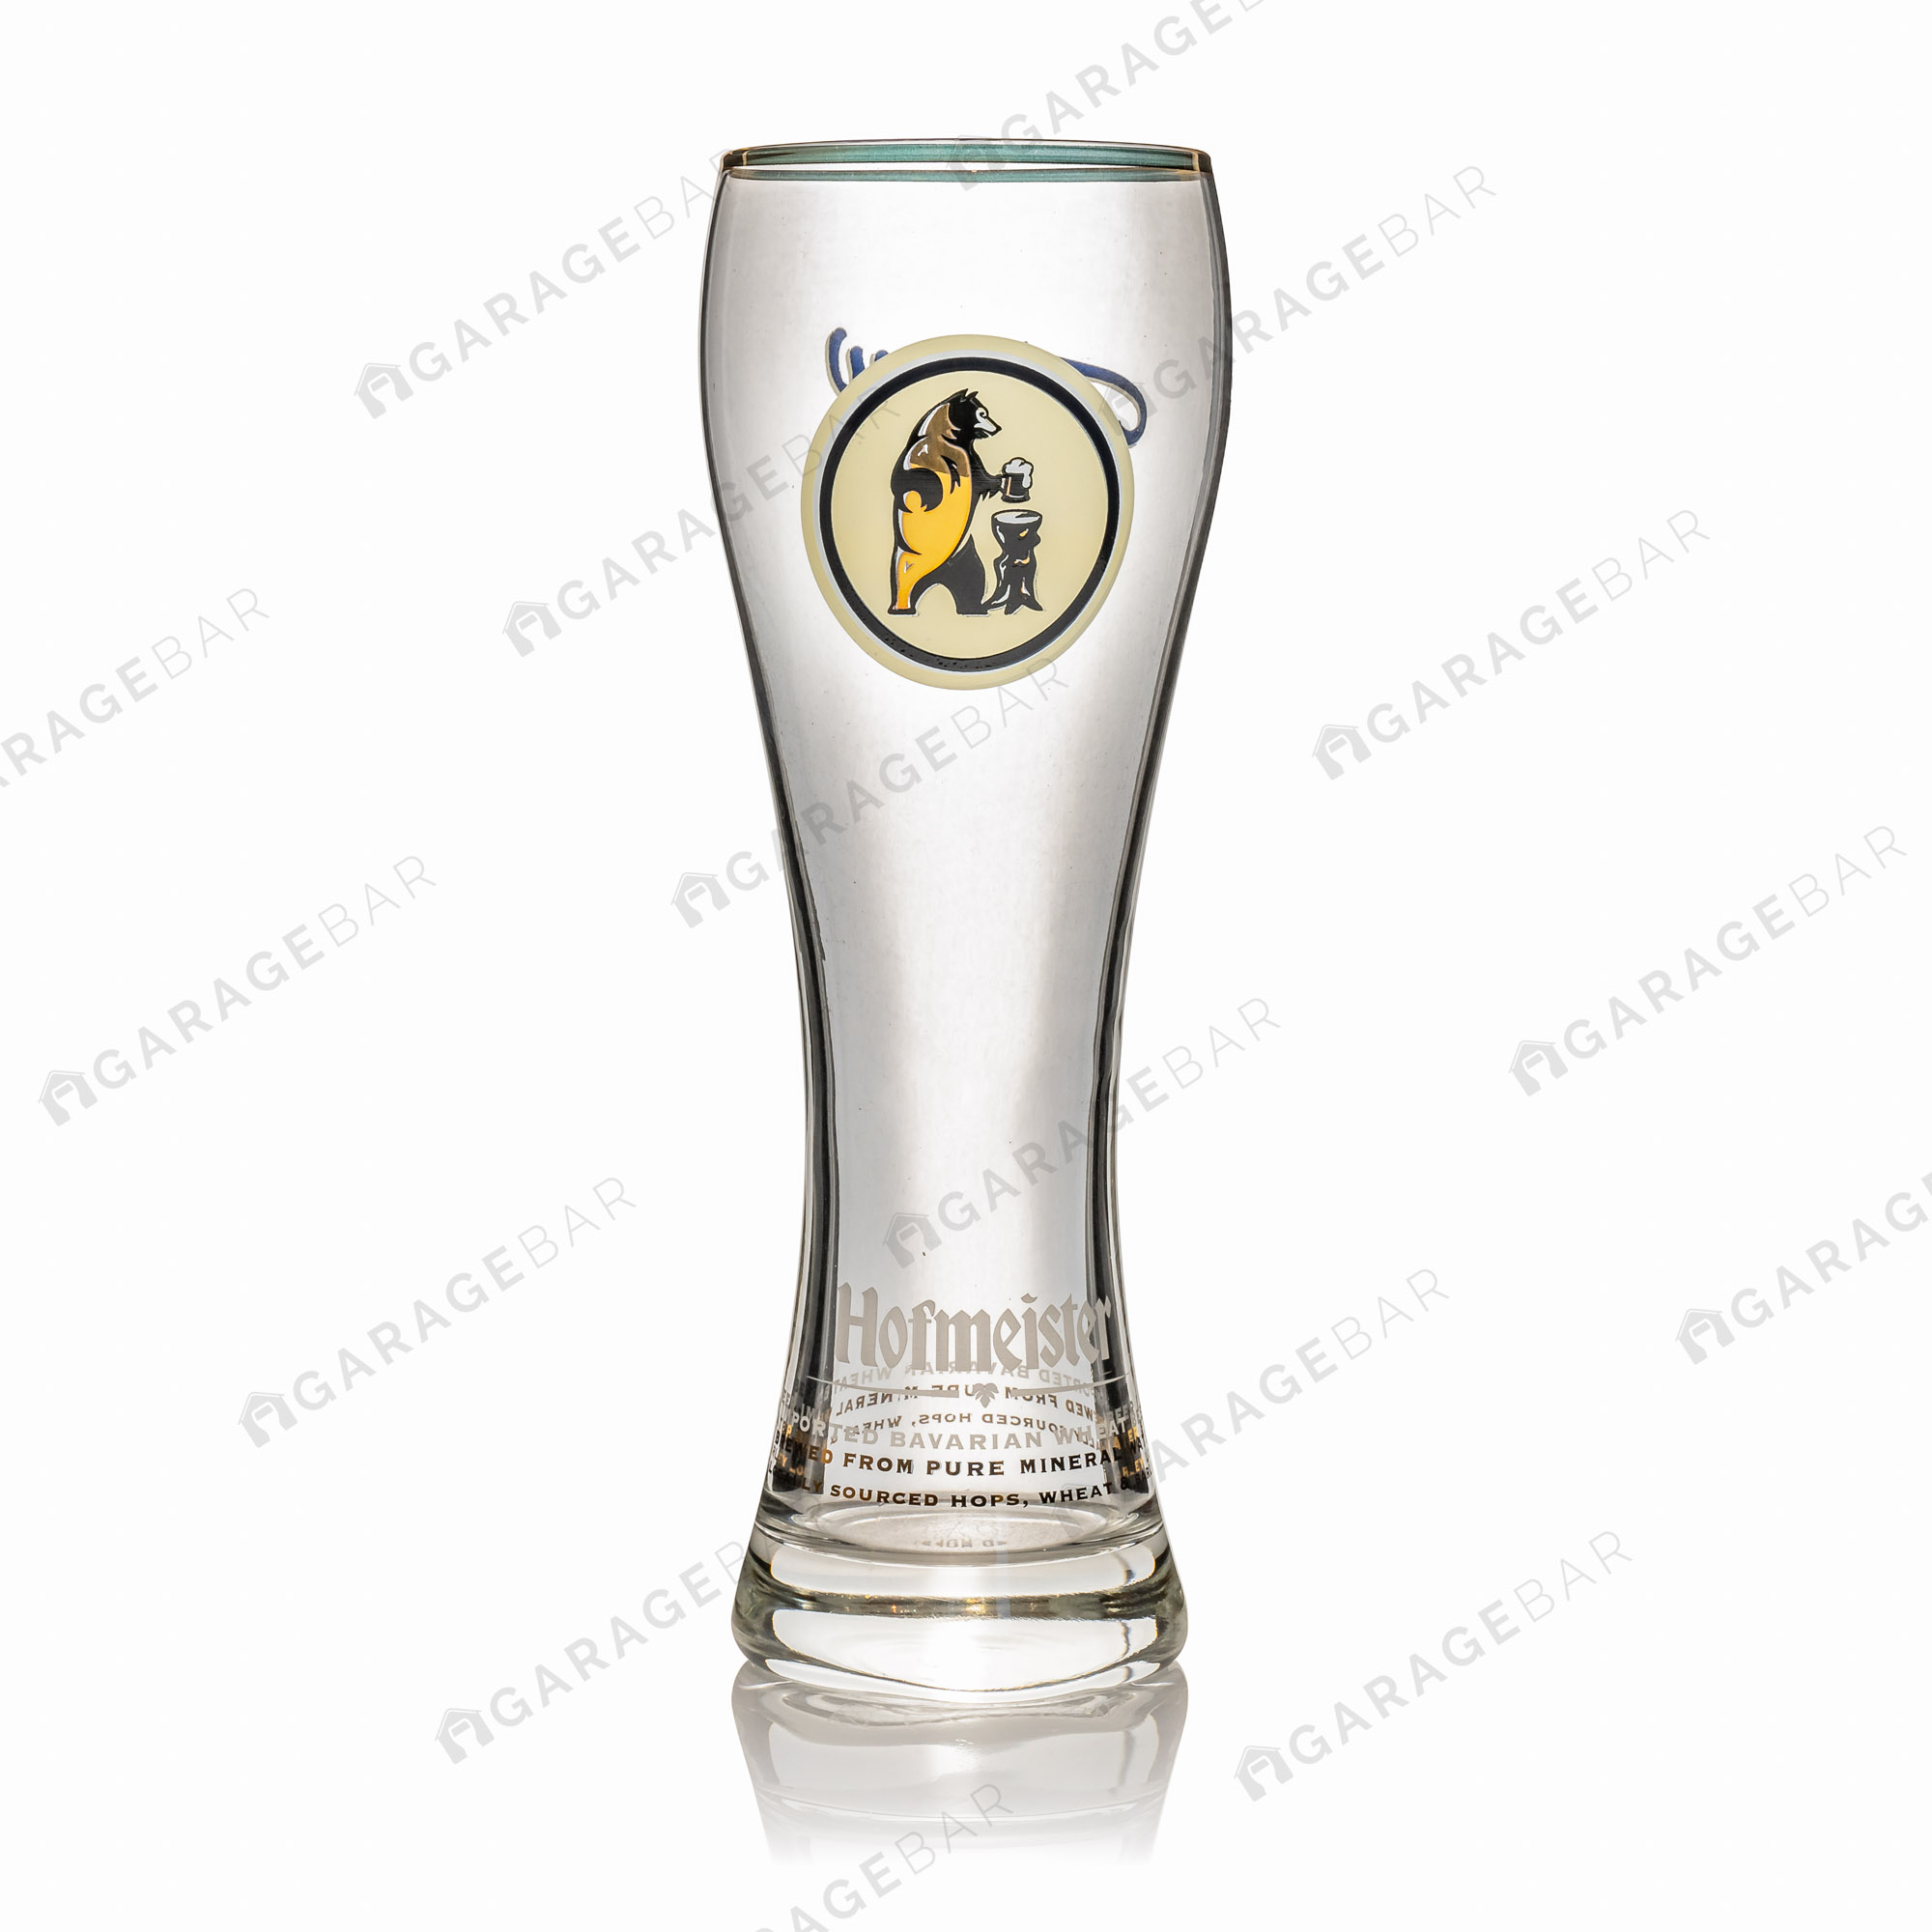 Hofmeister Weiss Beer Glass